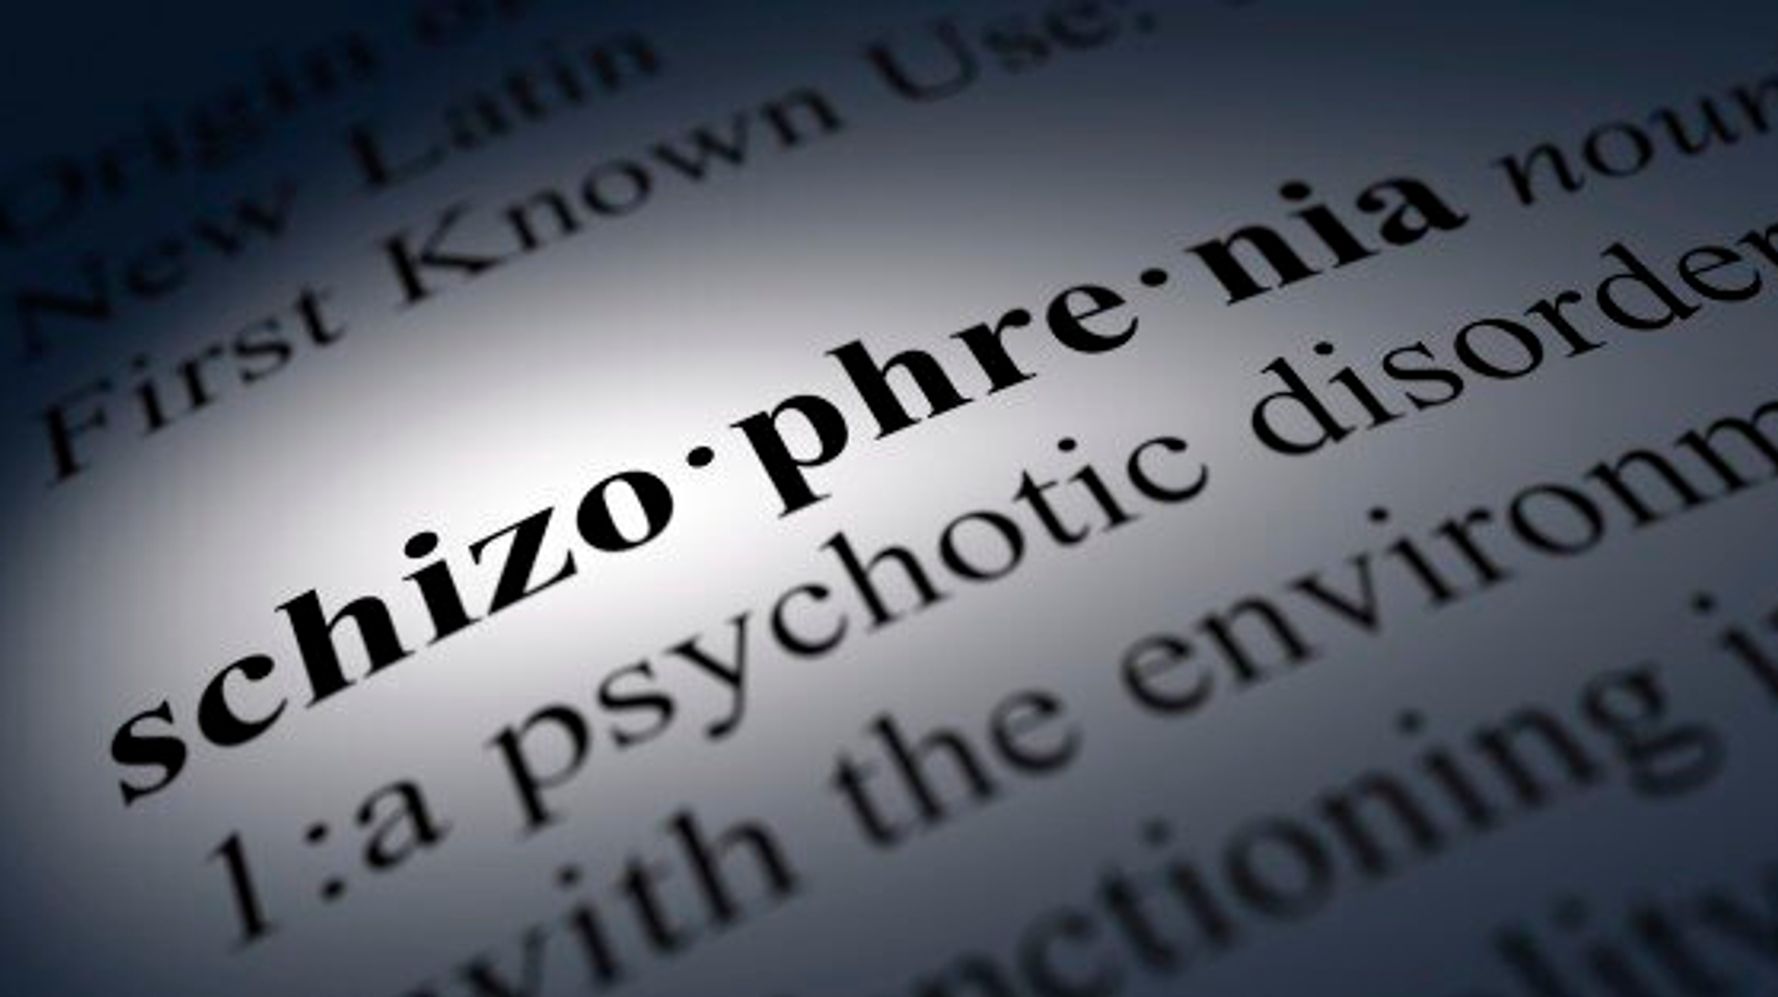 The word schizophrenia written in black on a white note 